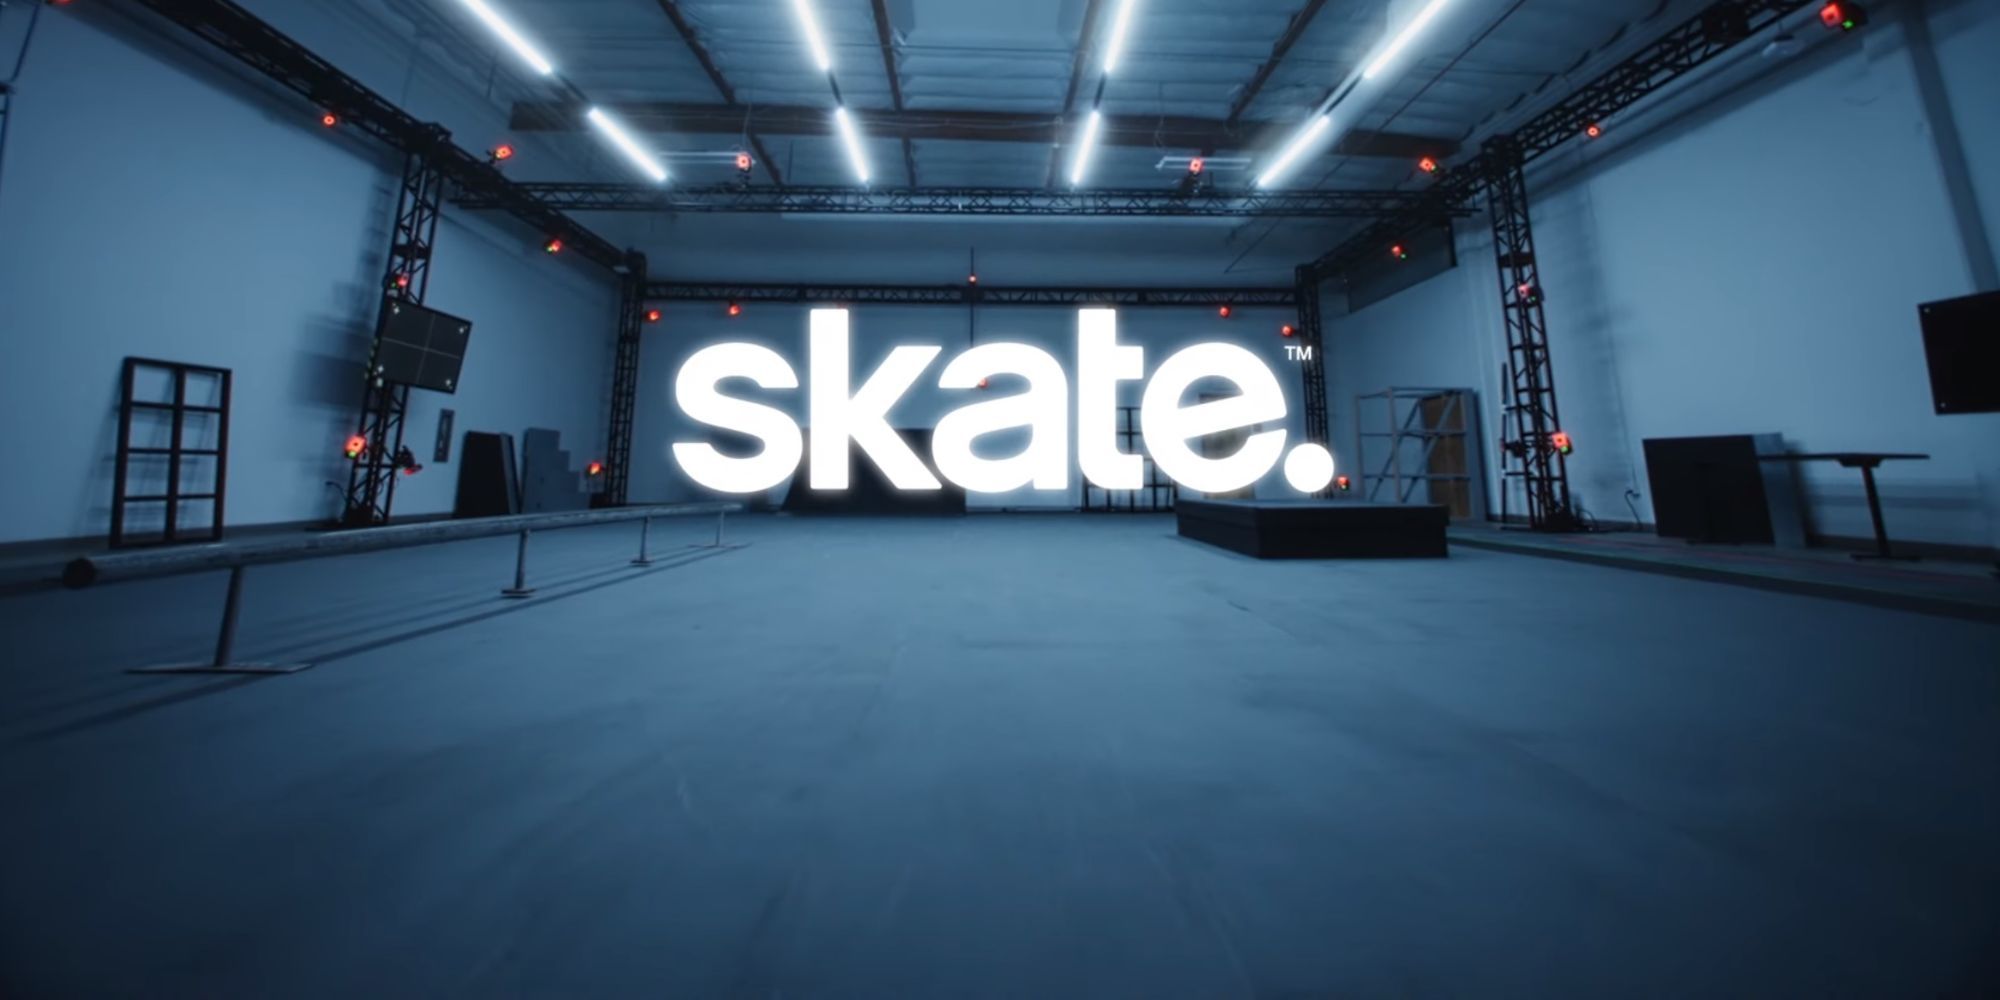 Skates 4: Five details we learned from the teaser trailer